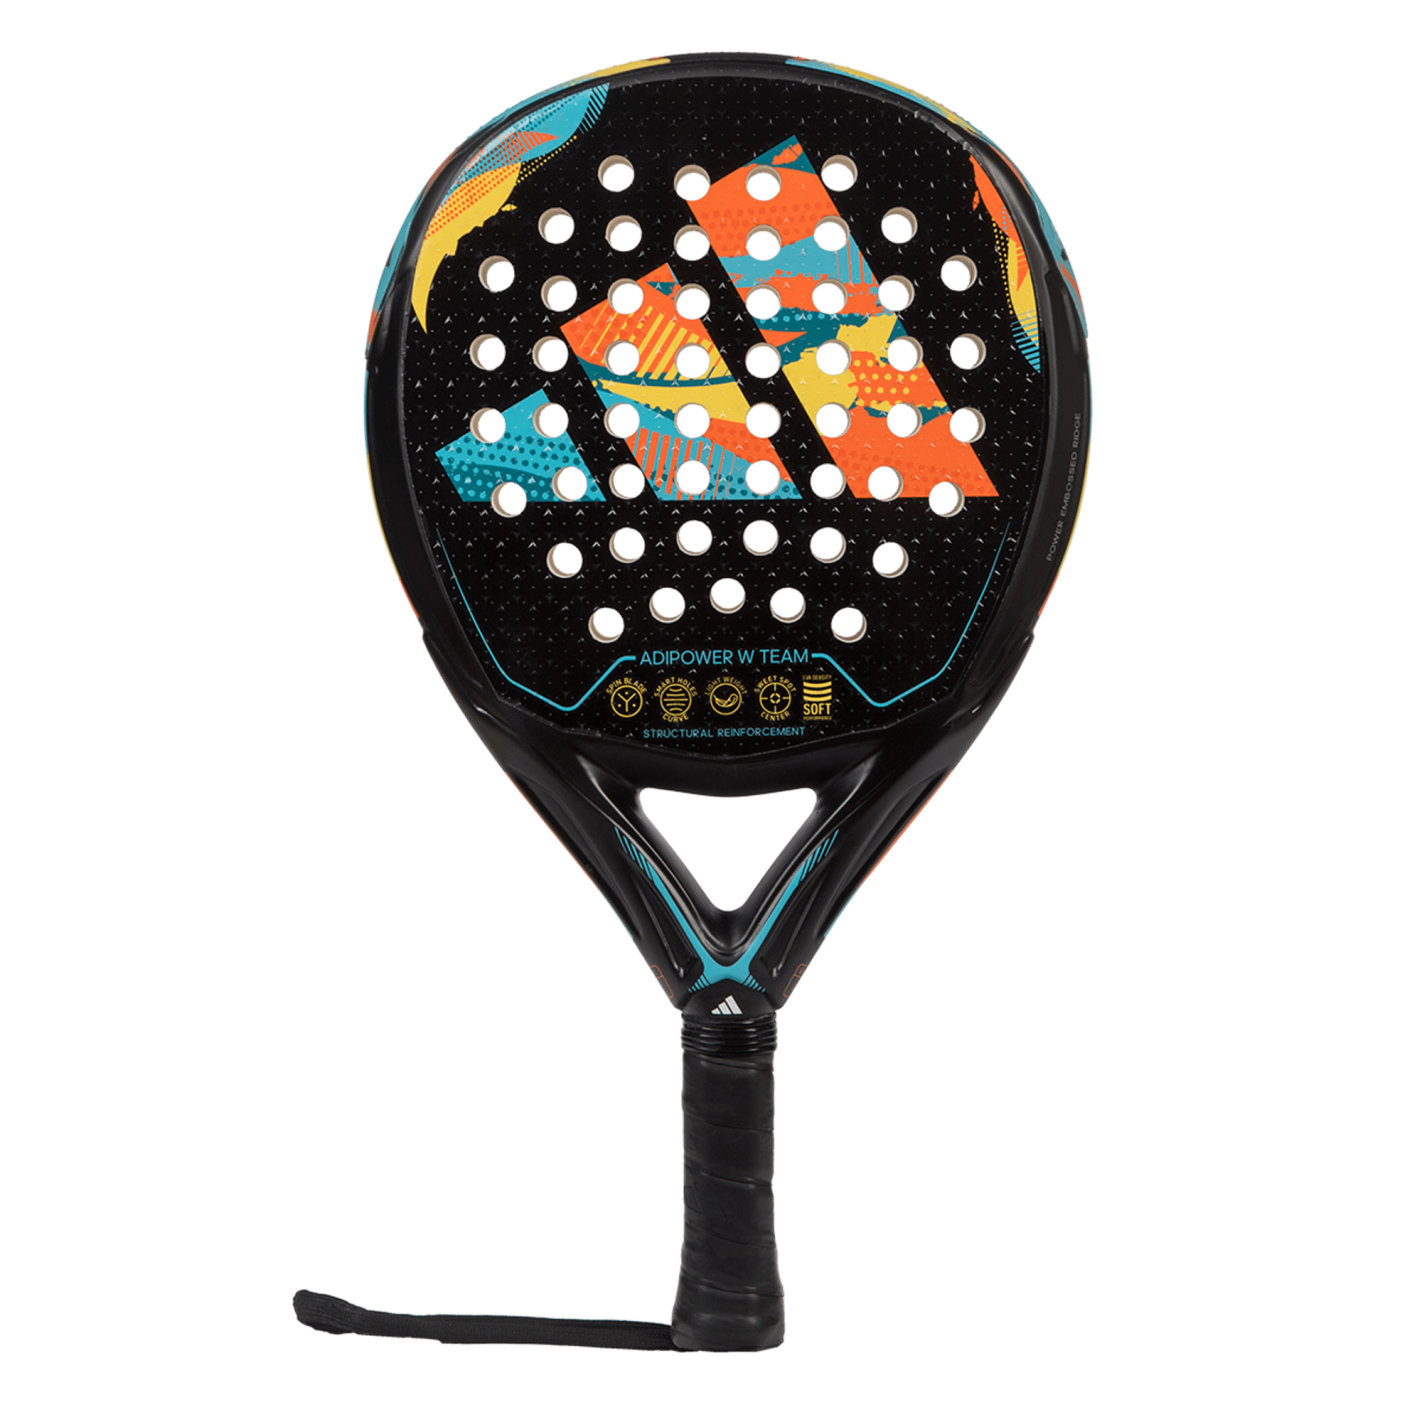 Mejores pelotas de tenis: Cuál comprar en 2023 - TennisHack